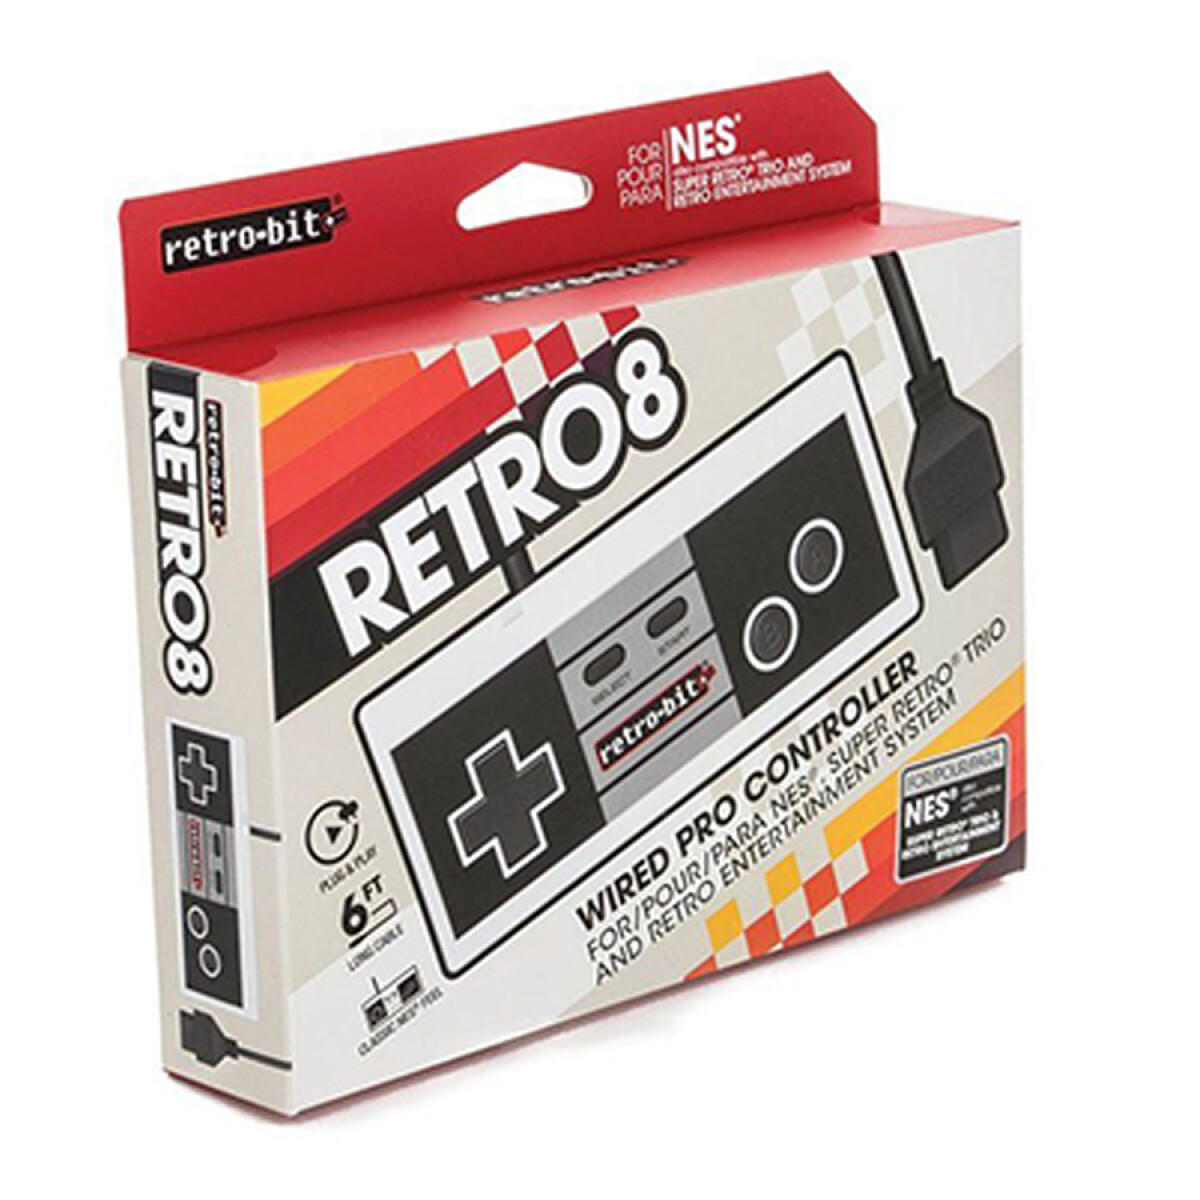 Control Retro Bit - Retro 8 - Modelo Nes 